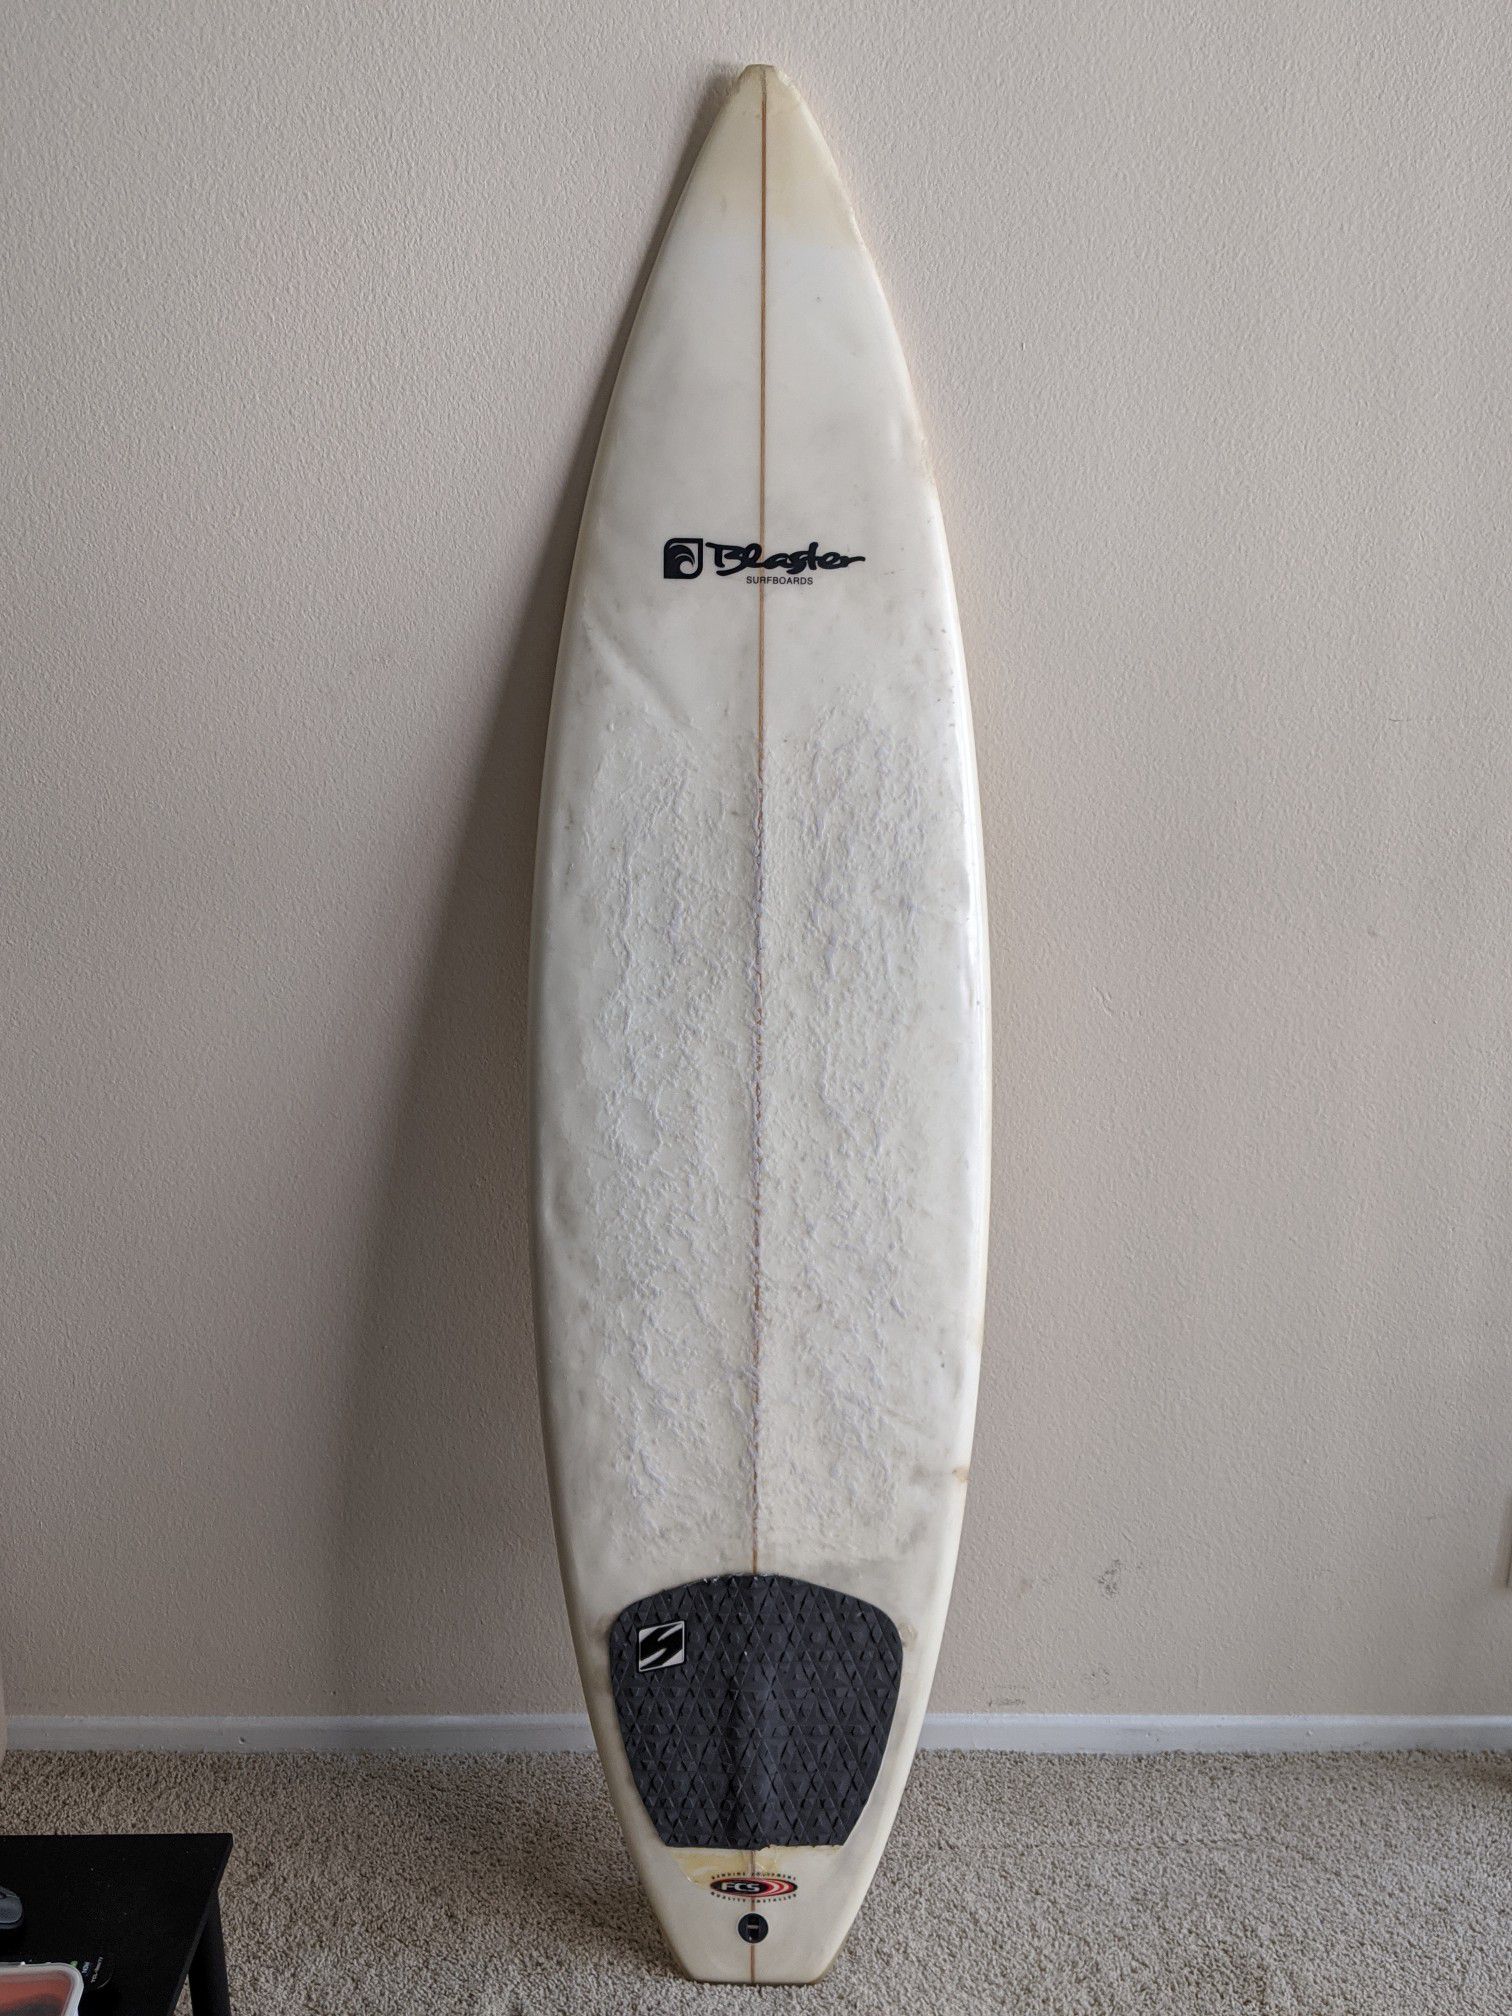 Shortboard Surfboard Blaster 6'2"